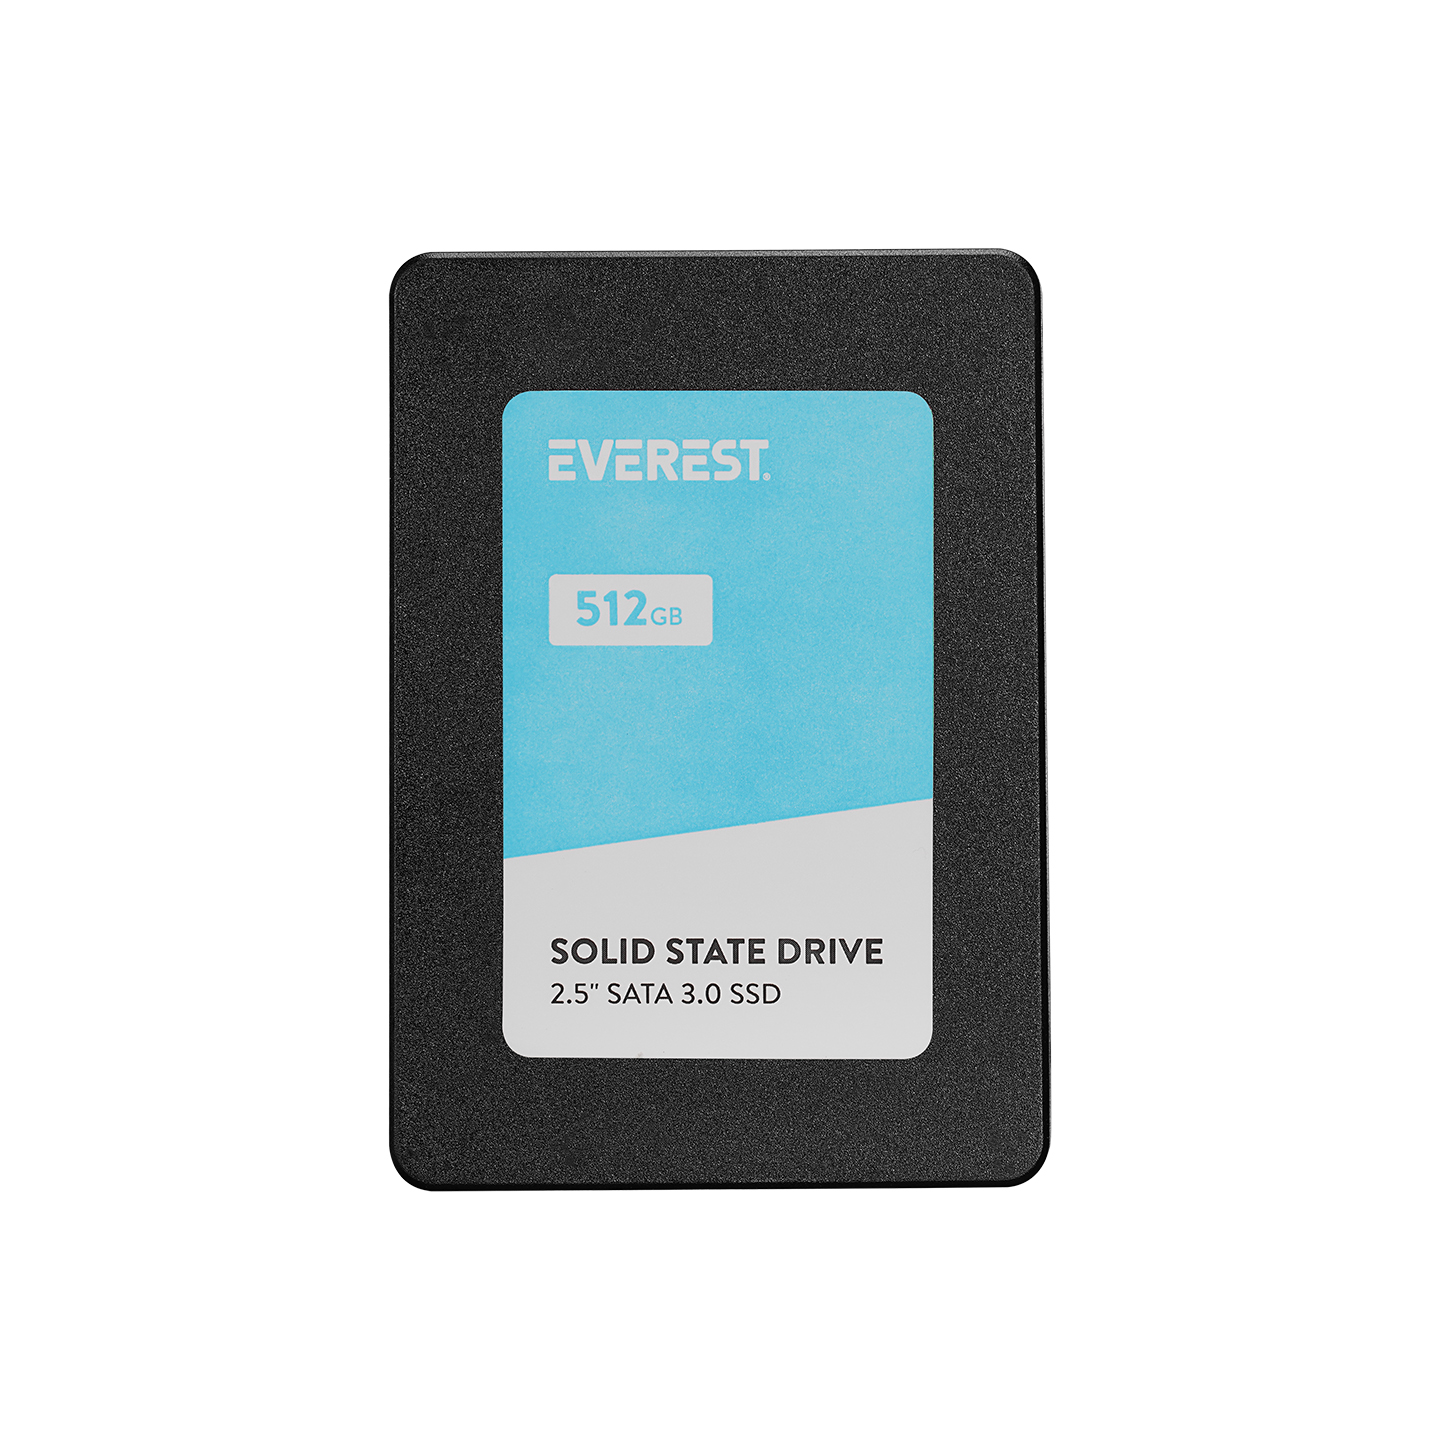 Everest ES512A 512GB 2.5 SATA3.0 550MB/460MB 3D NAND Flash SSD (Solid State Drive)